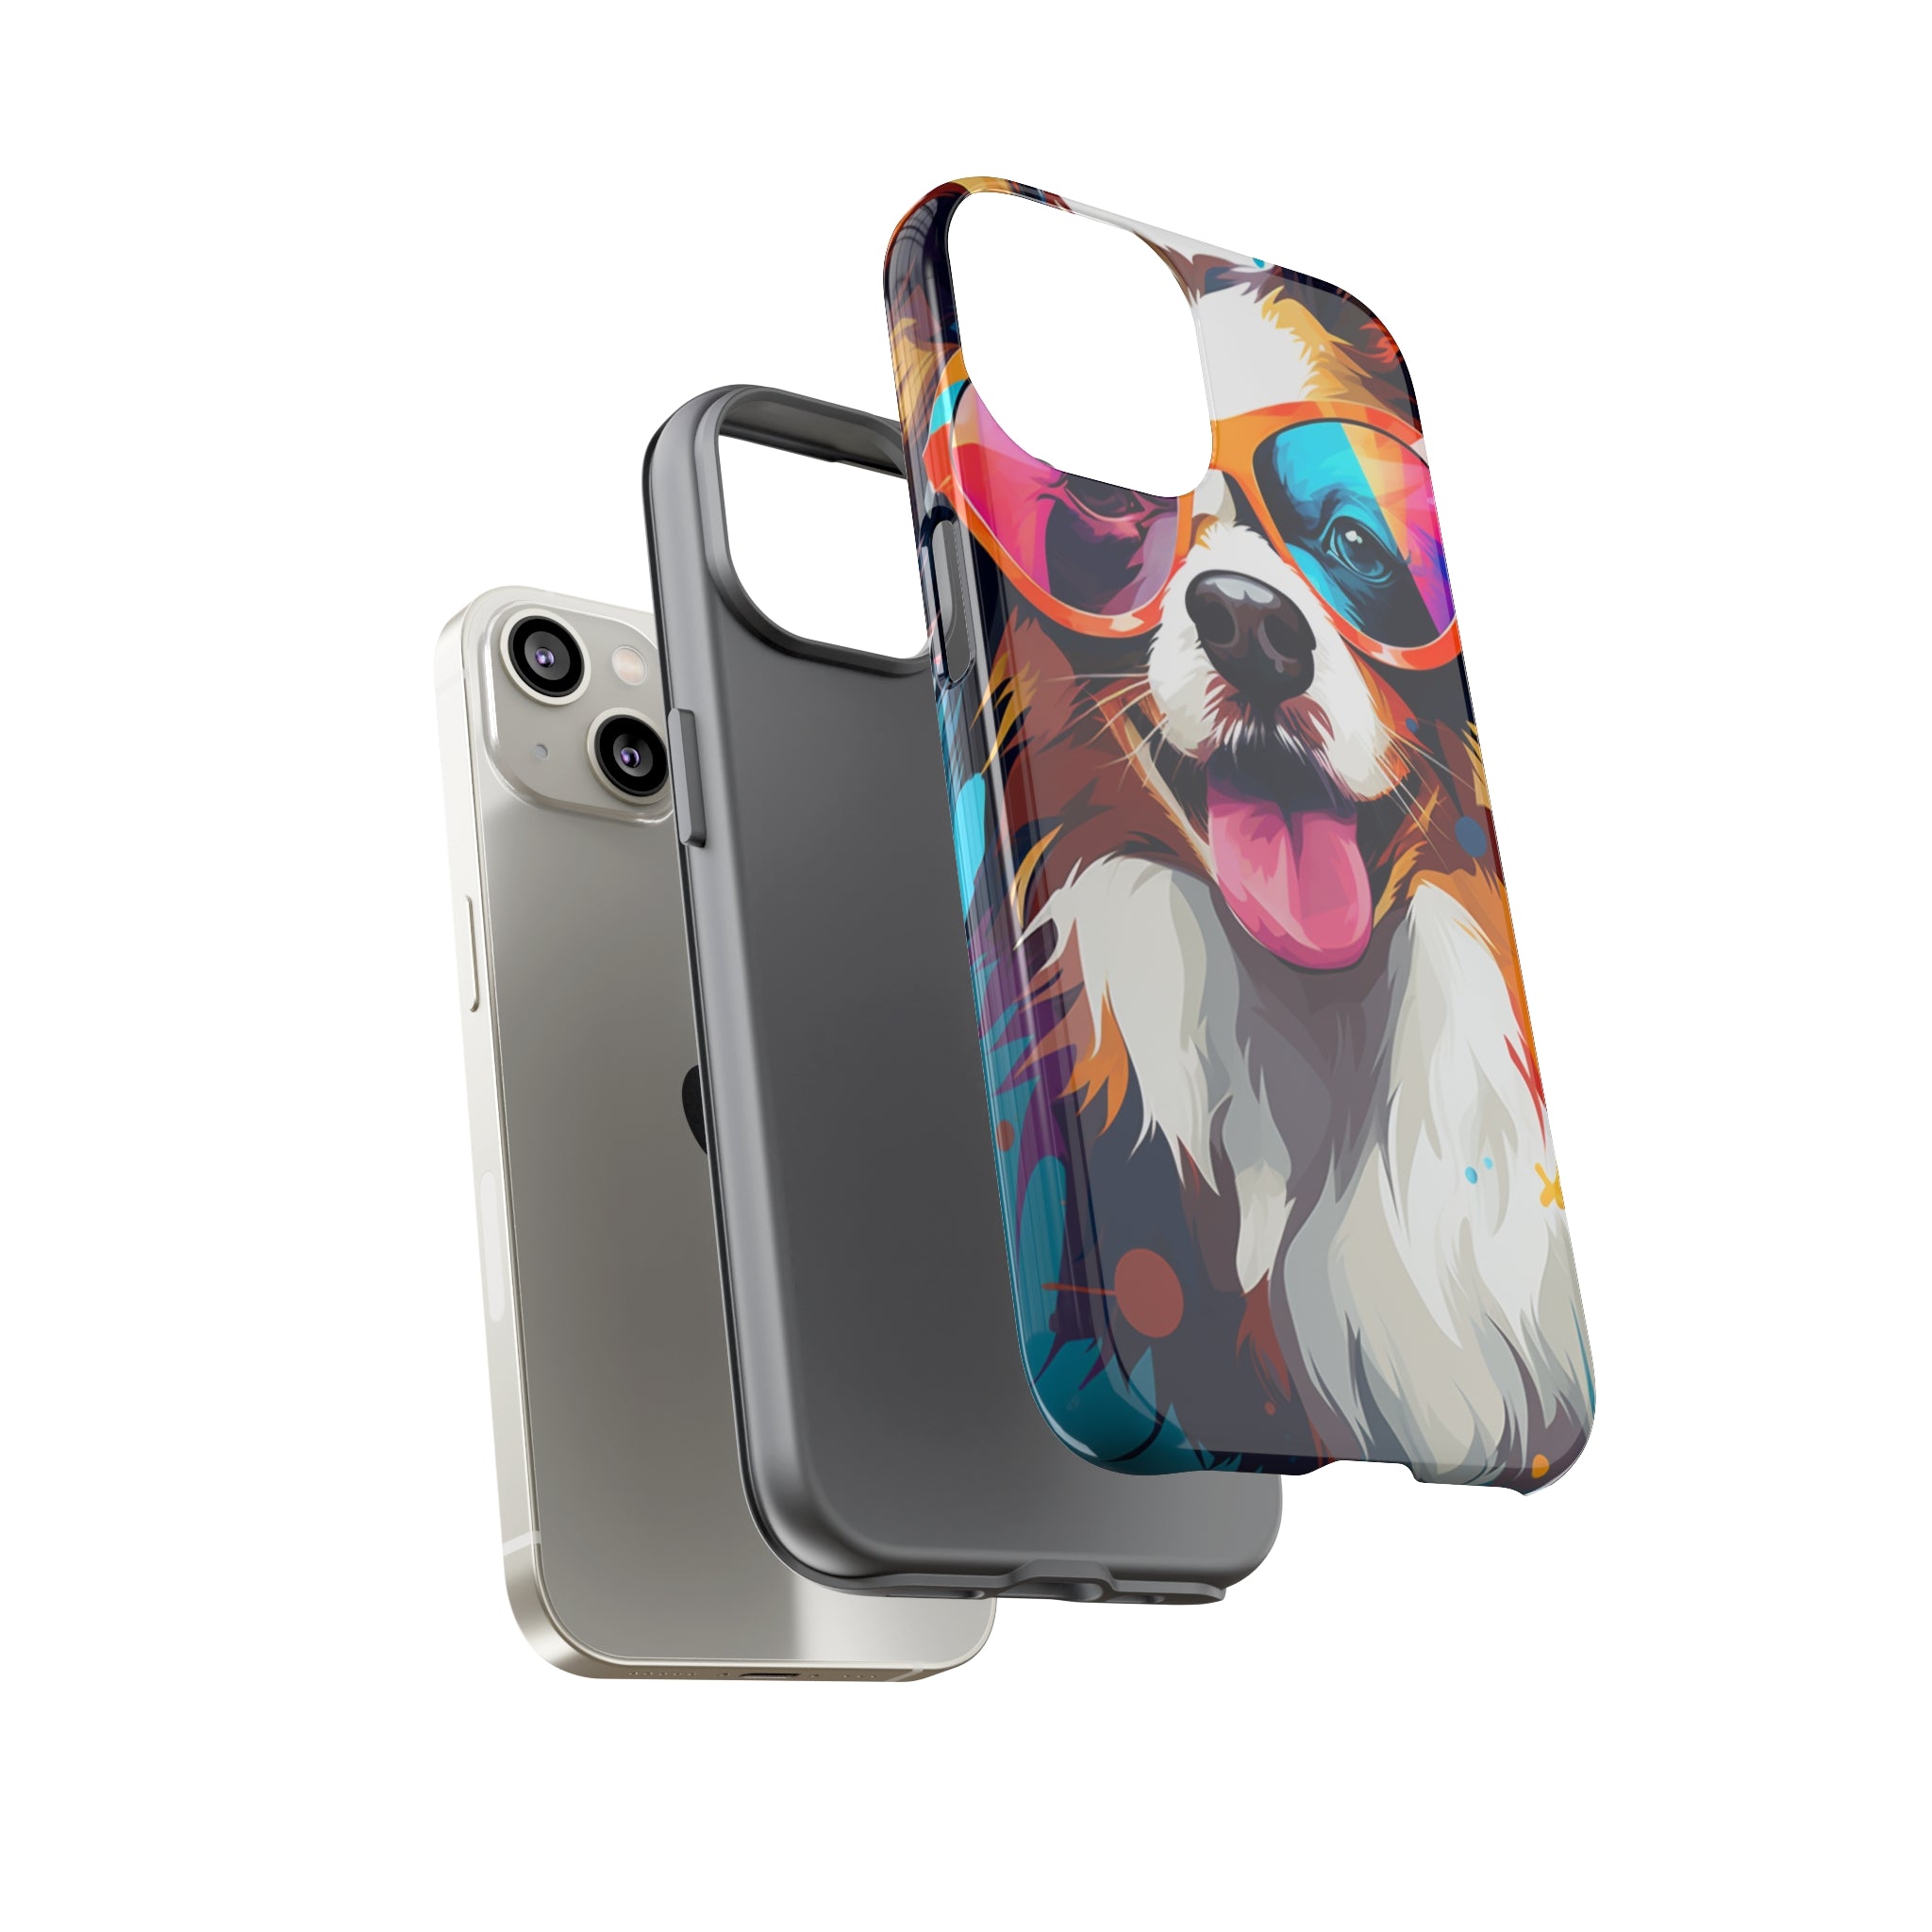 The Fashion Dog Co. Phone Case